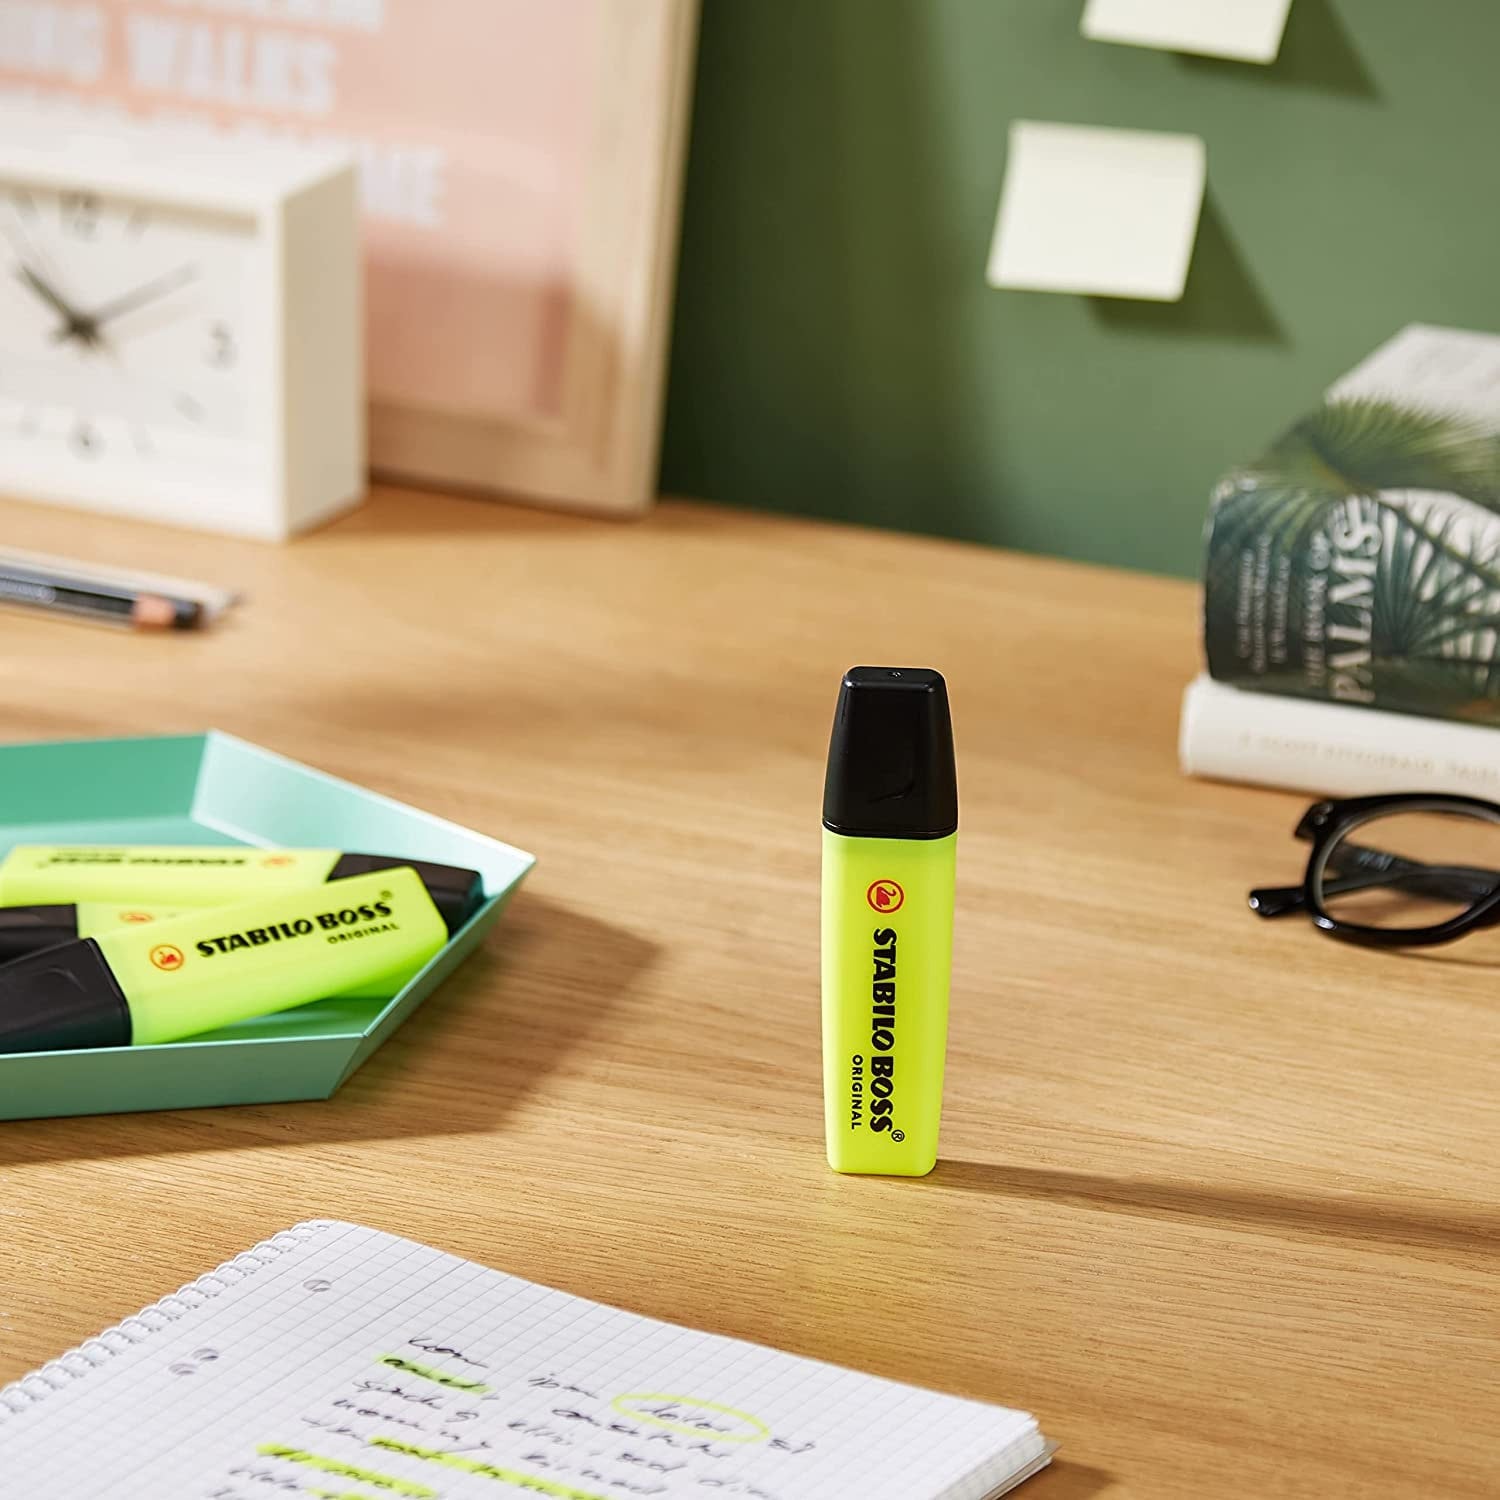 Highlighter STABILO BOSS EXECUTIVE Neon Wallet of 4 Green, Pink, Orange,  Yellow 2-5mm Chisel Tip Highlighting Marker Pen -  Finland